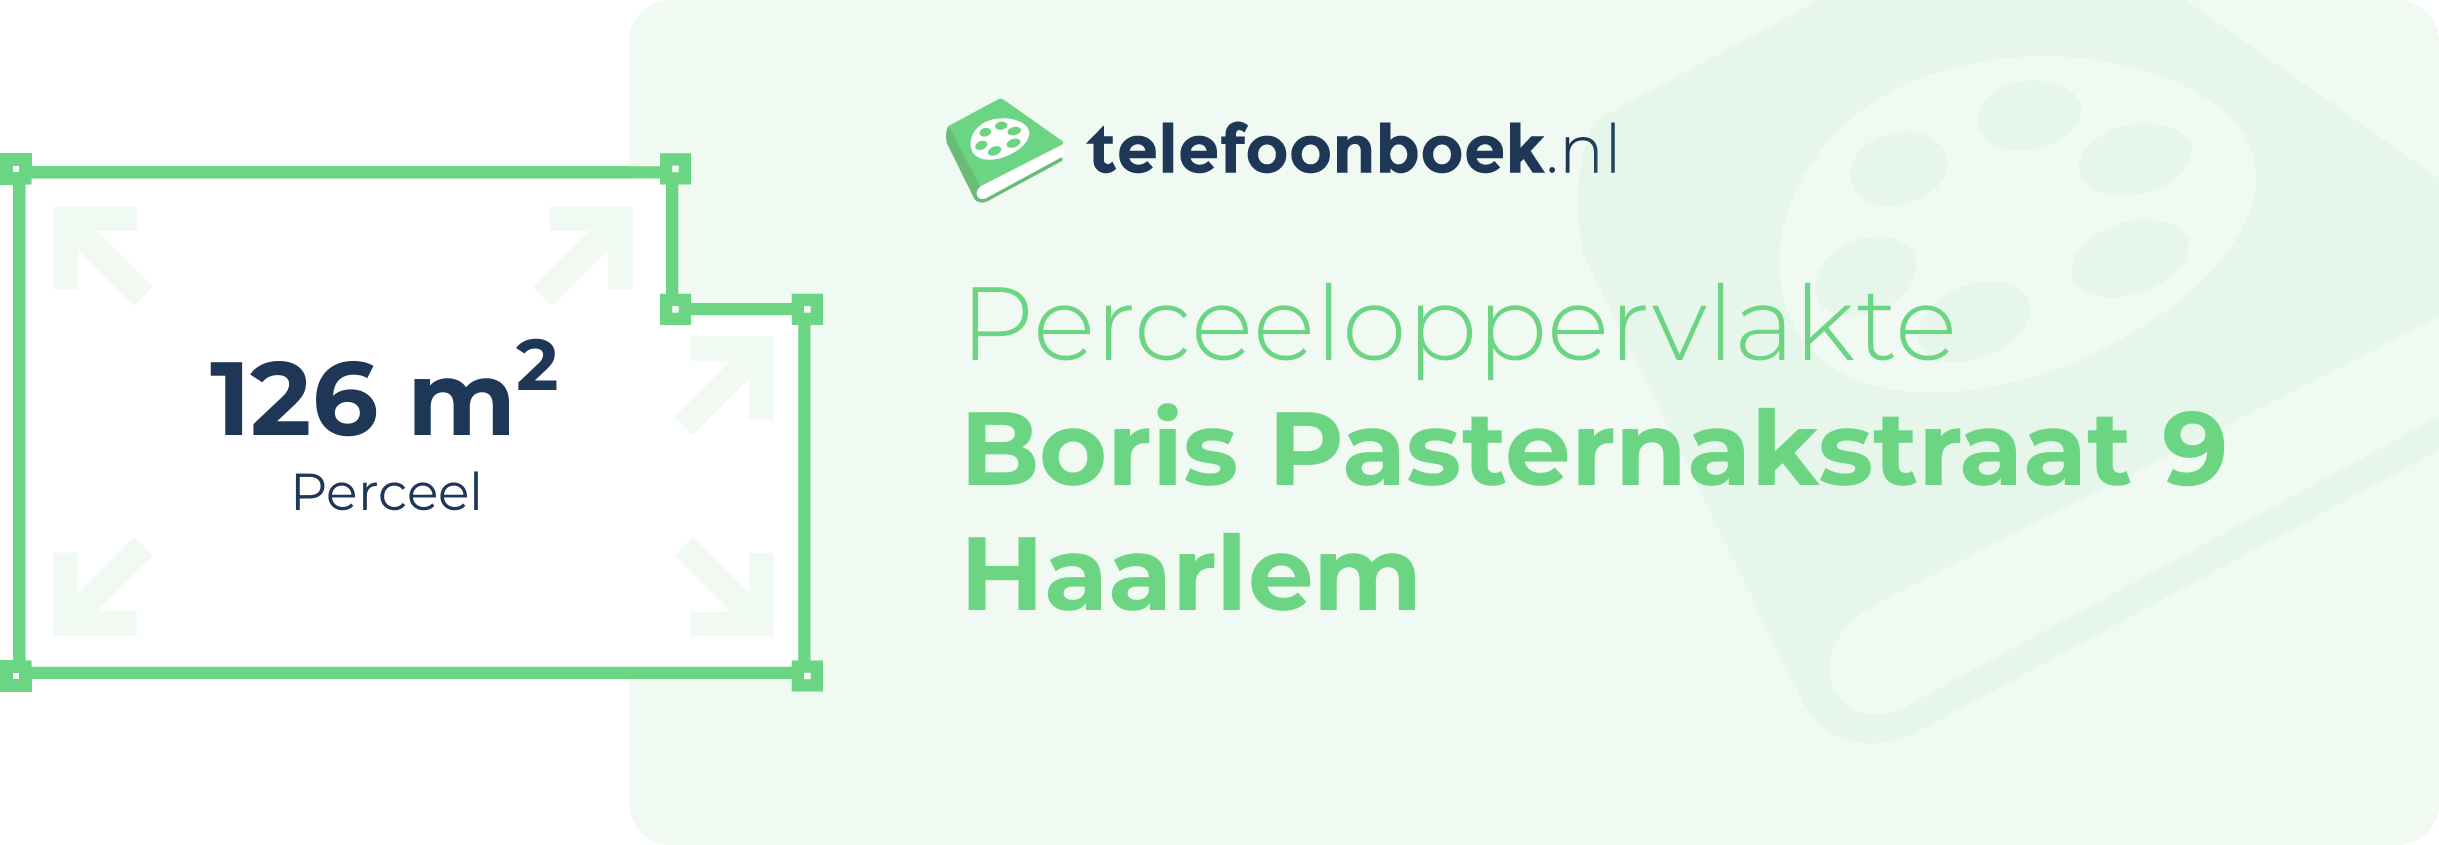 Perceeloppervlakte Boris Pasternakstraat 9 Haarlem